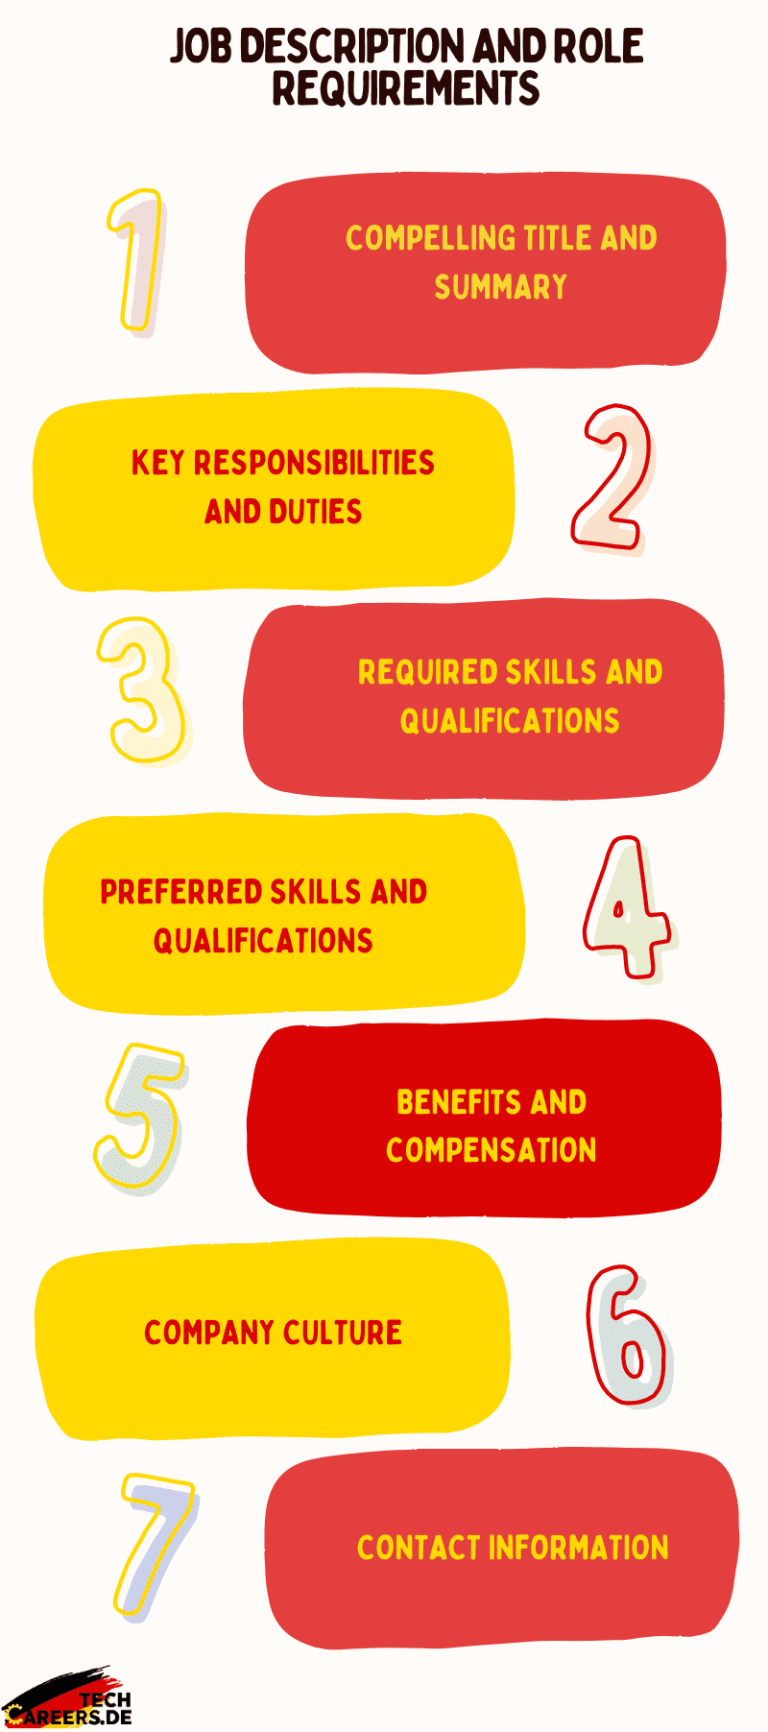 Job Description and Role Requirements_conduct job interview